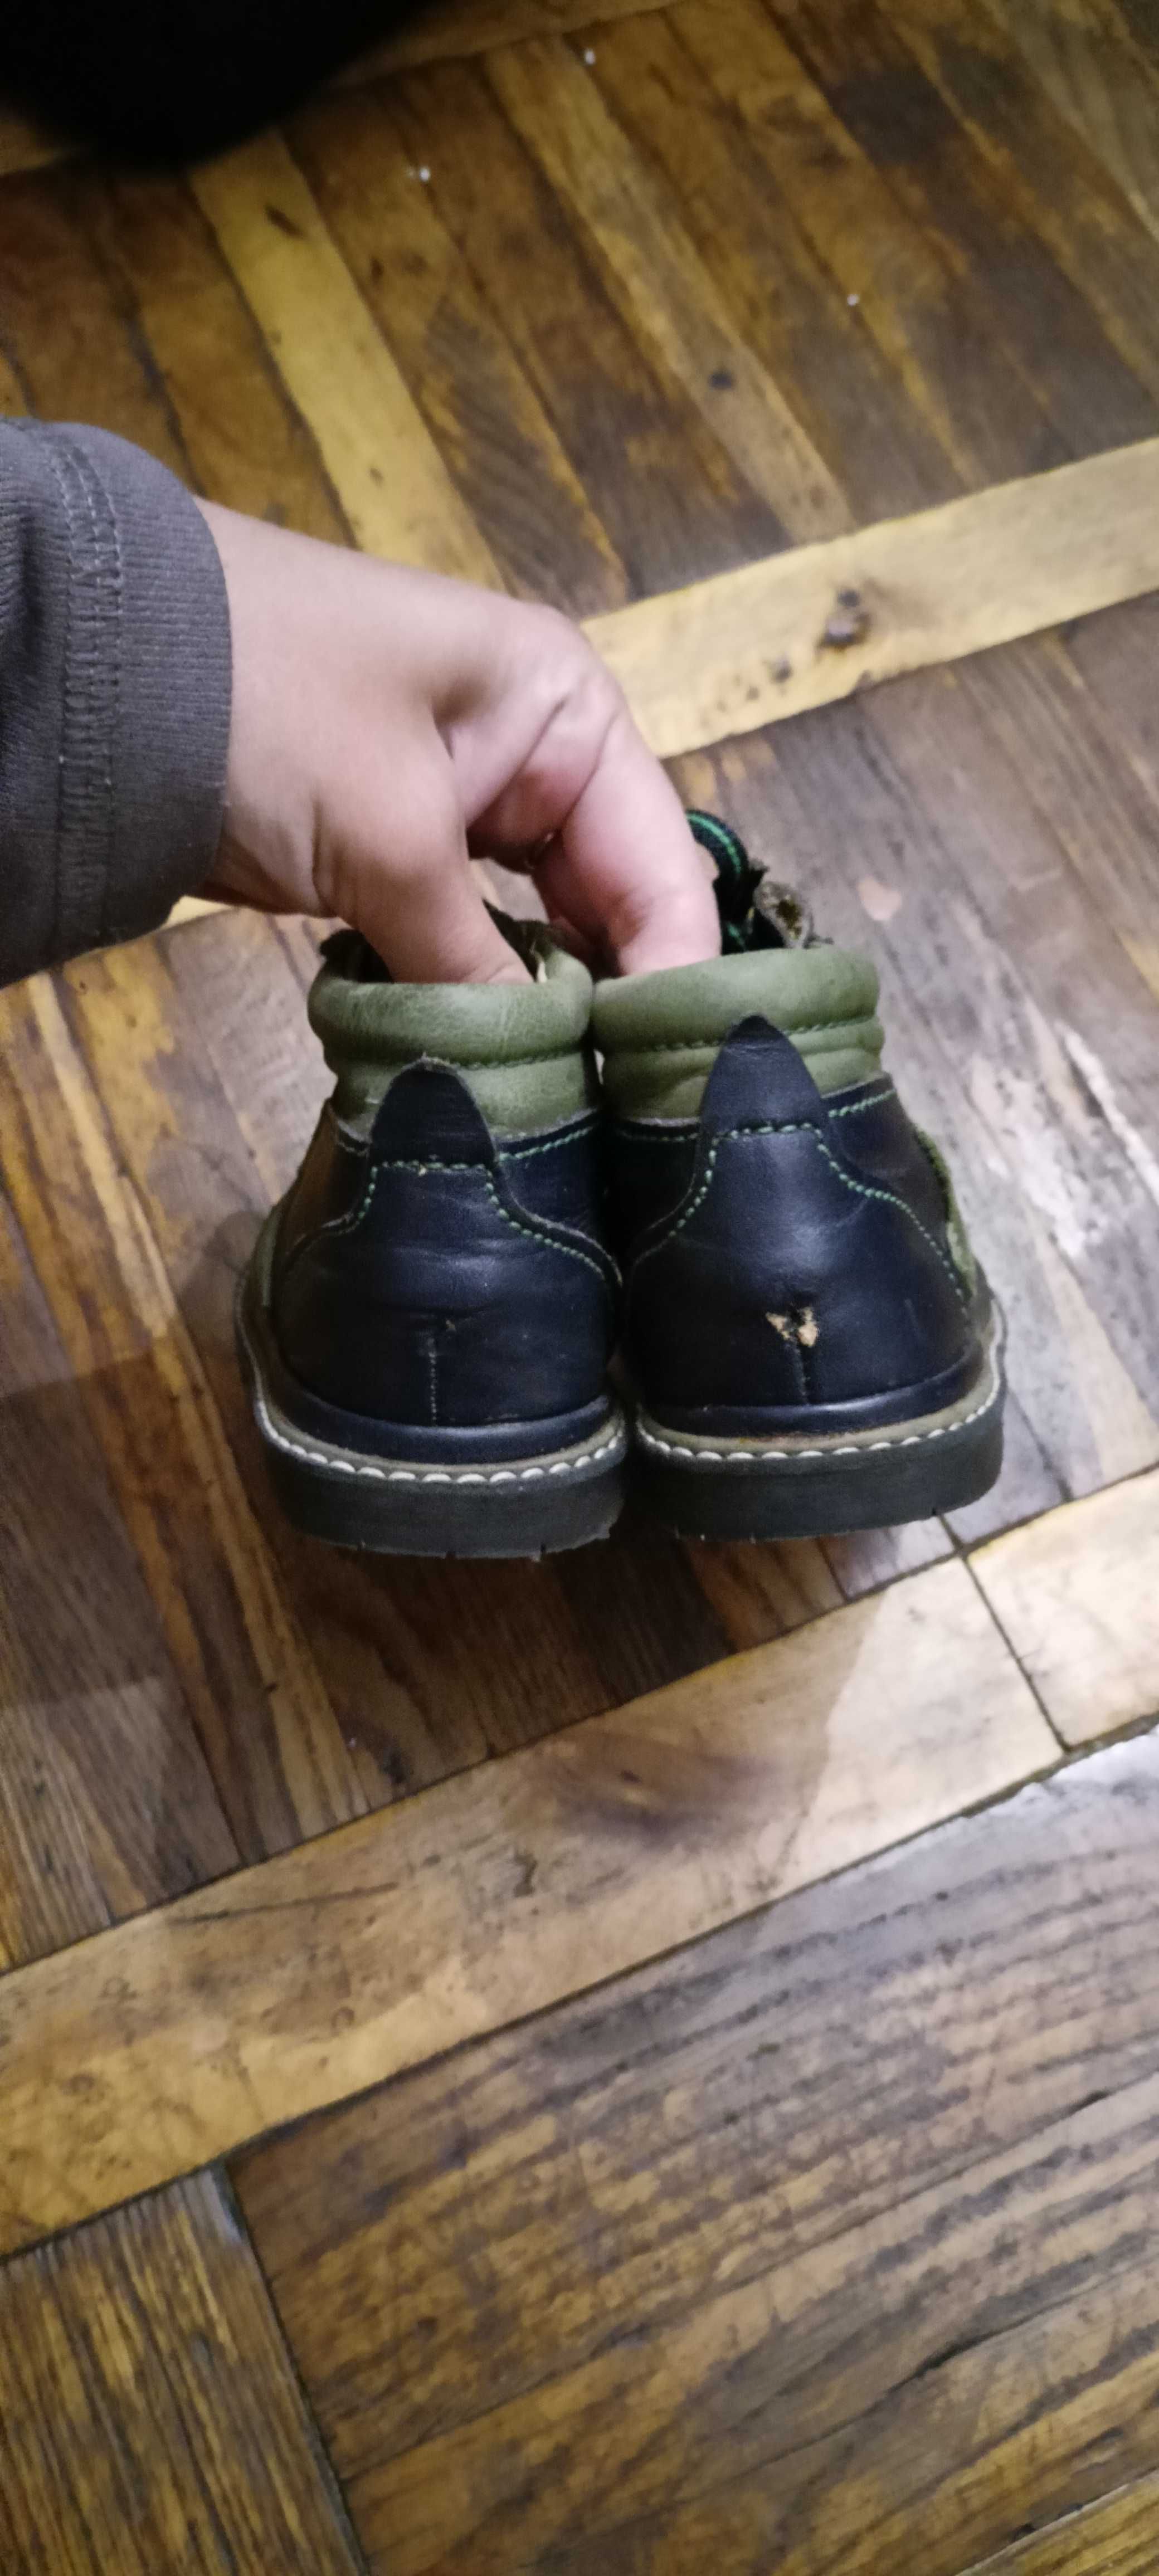 Ботинки для мальчика 22 размер фирмы Palomino